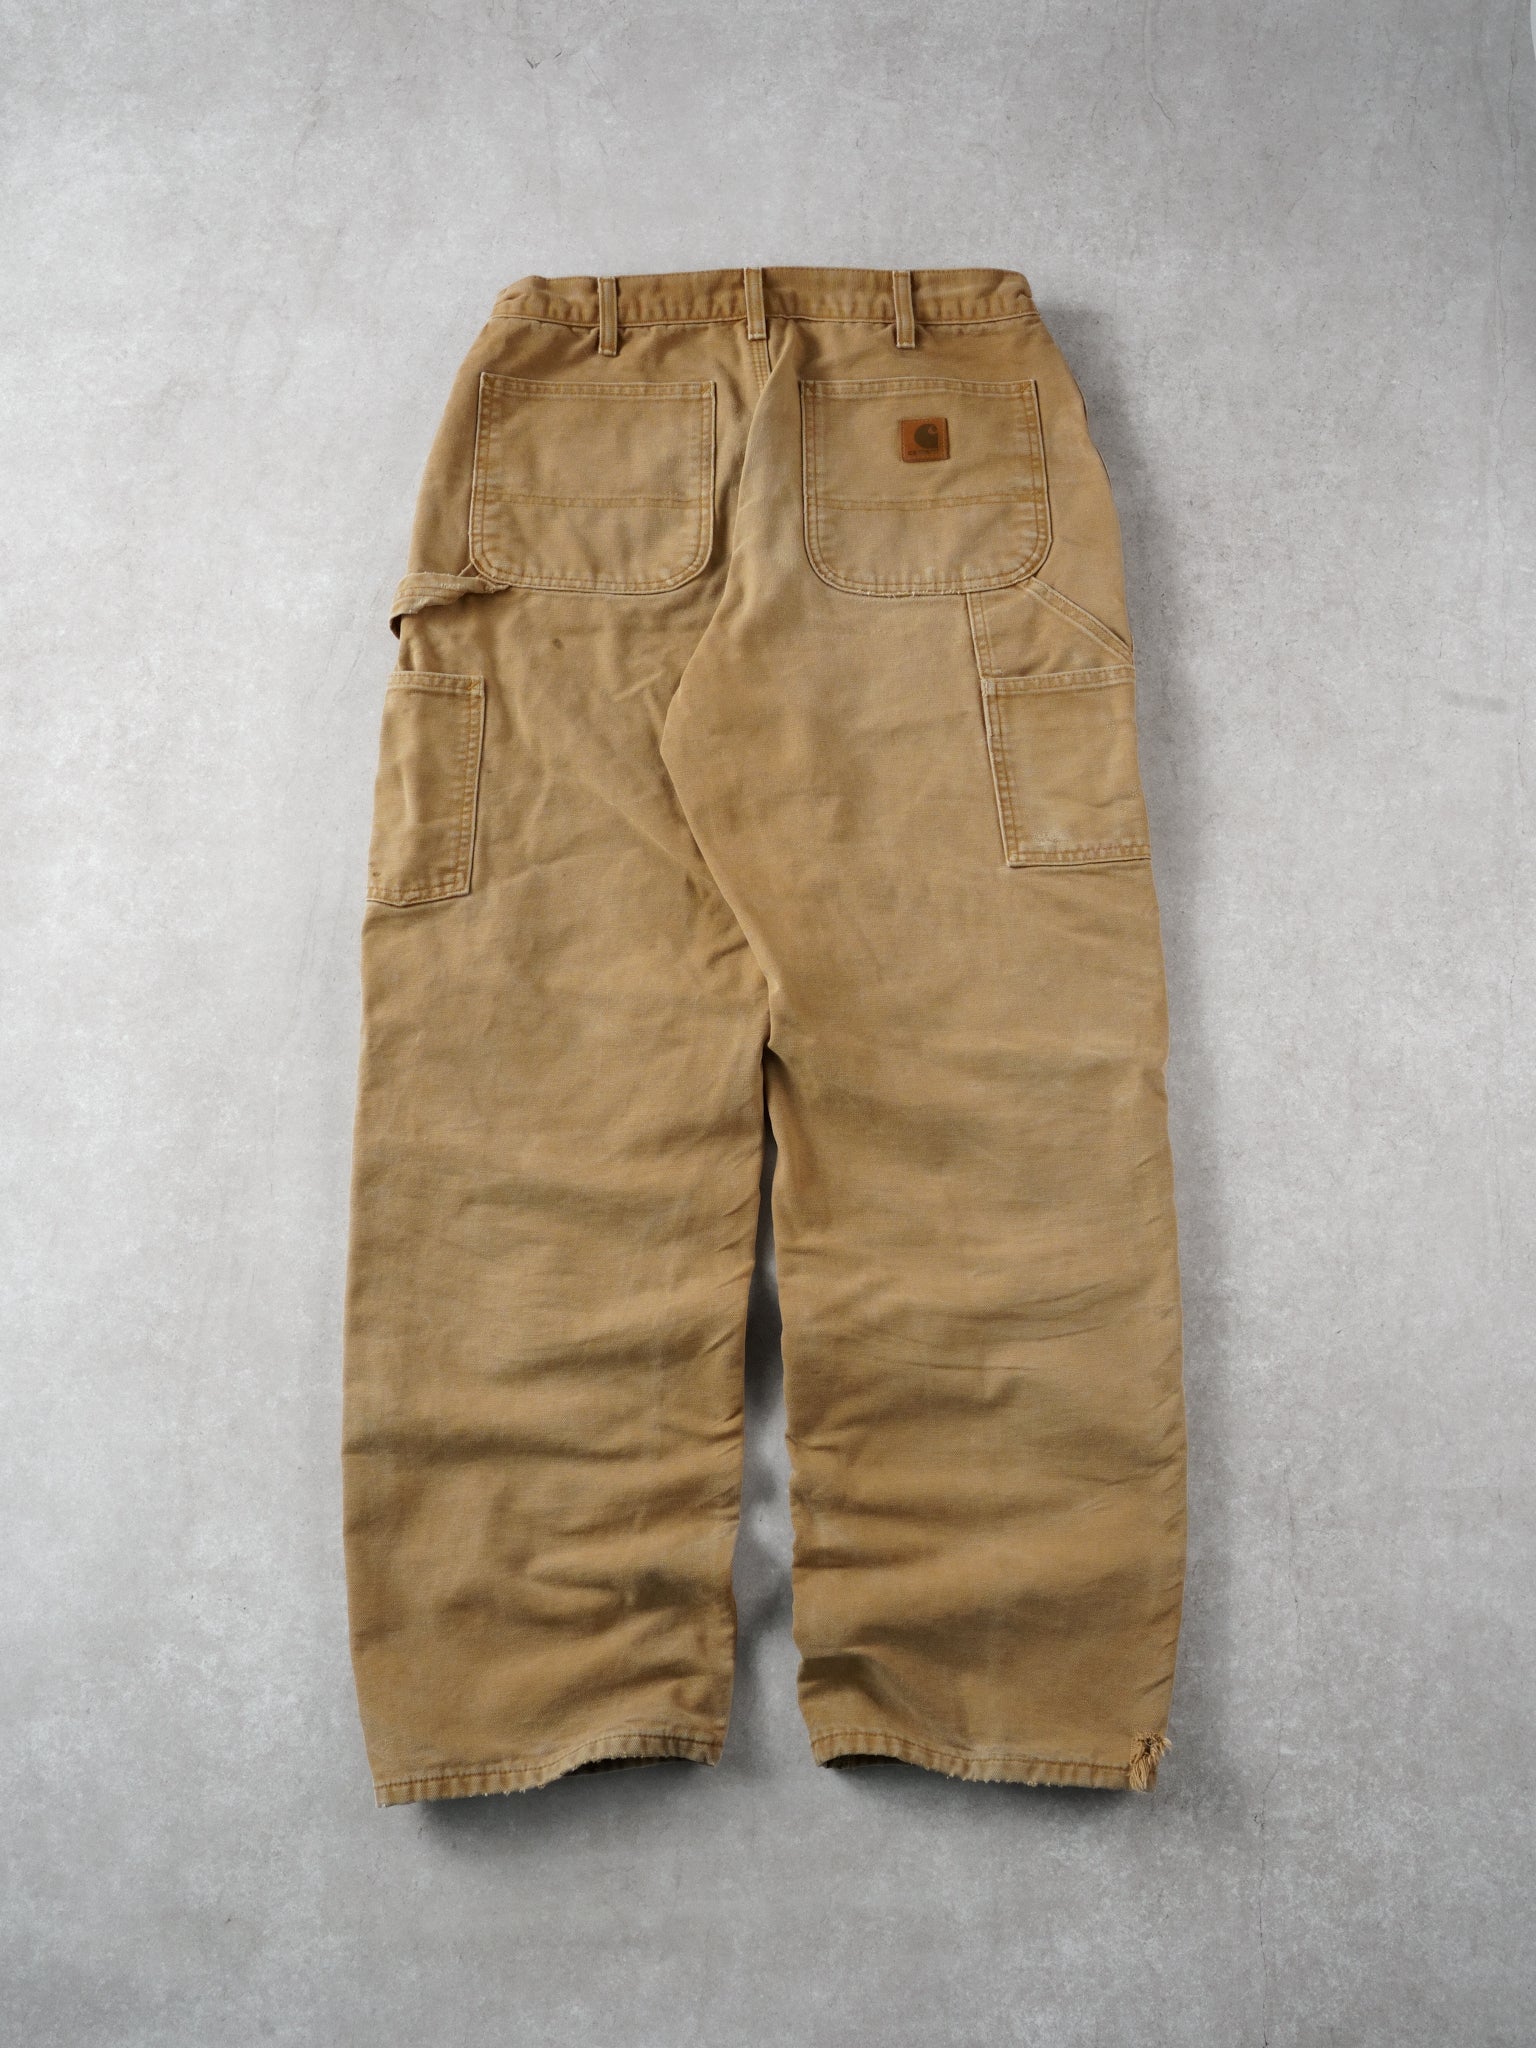 Vintage 90s Khaki Carhartt Workwear Carpenter Pants (32x32)